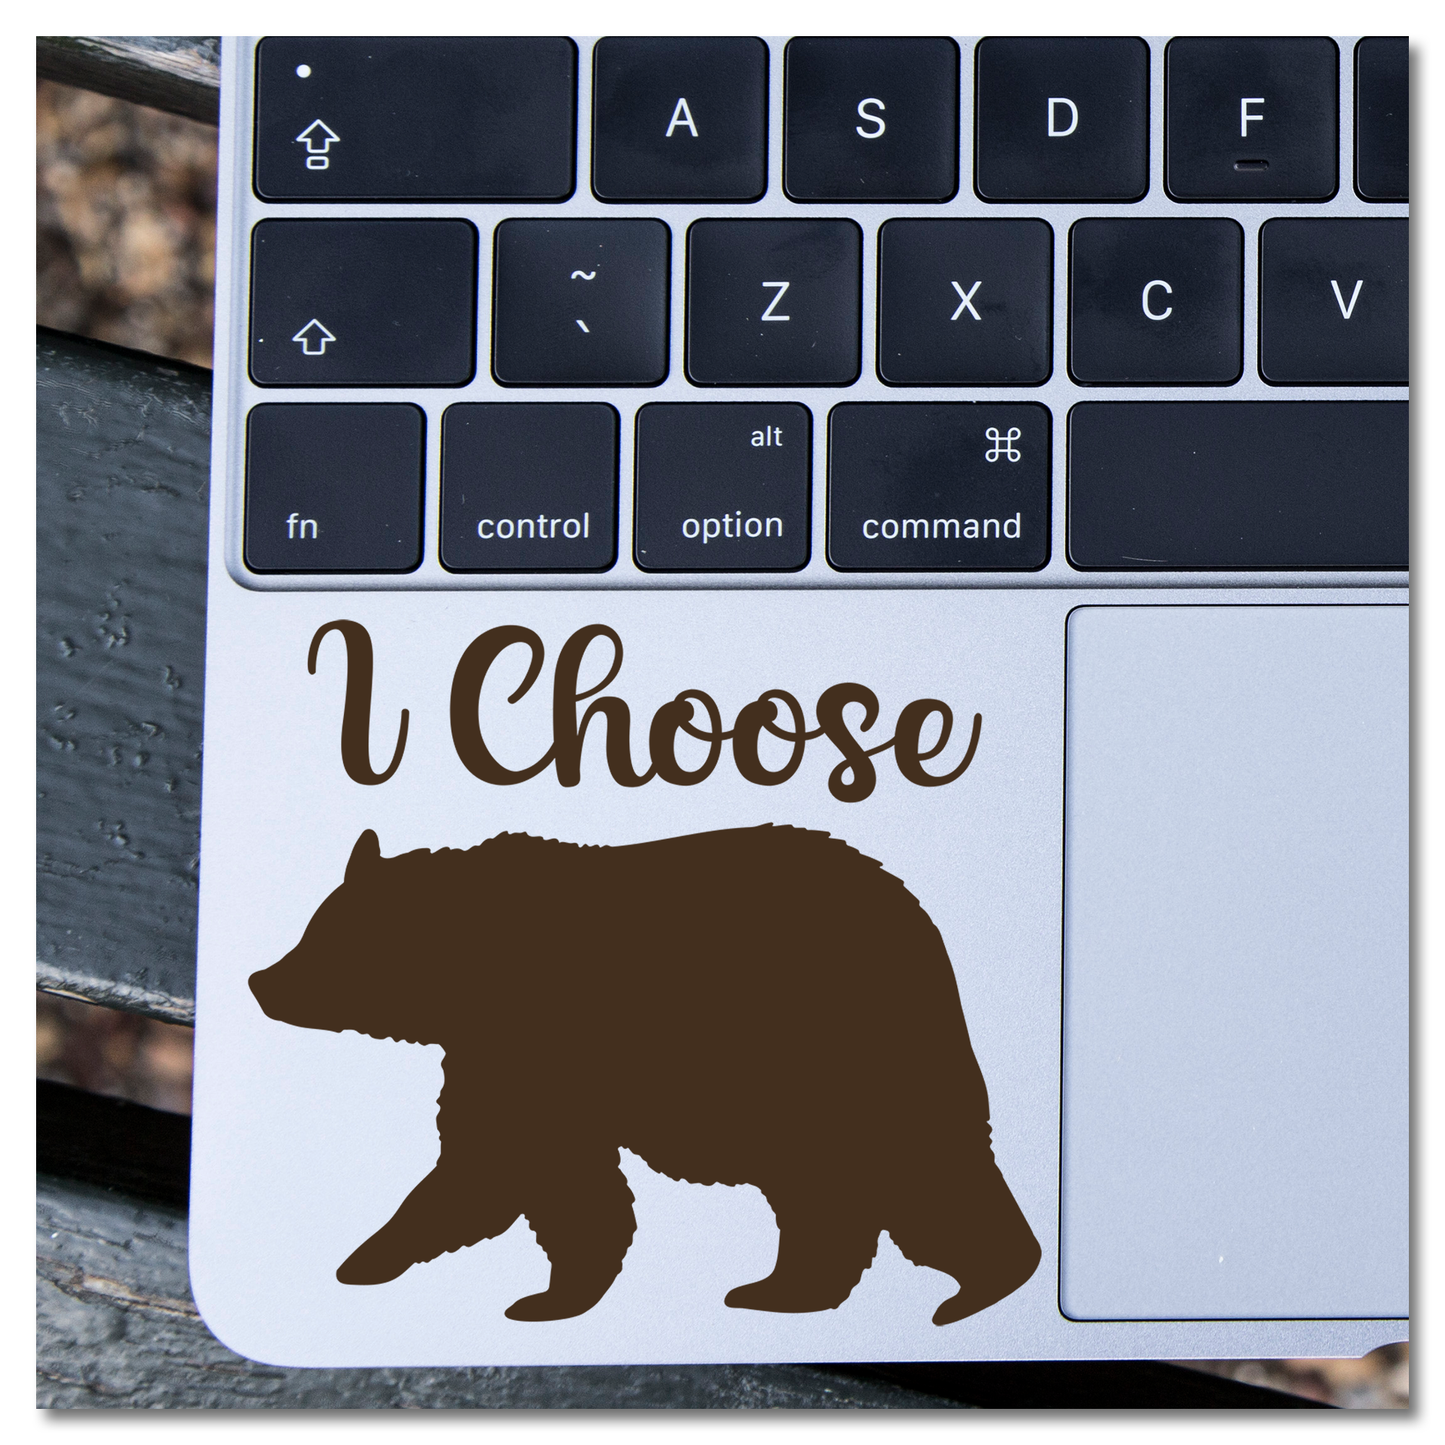 I Choose A Bear Vinyl Decal Sticker